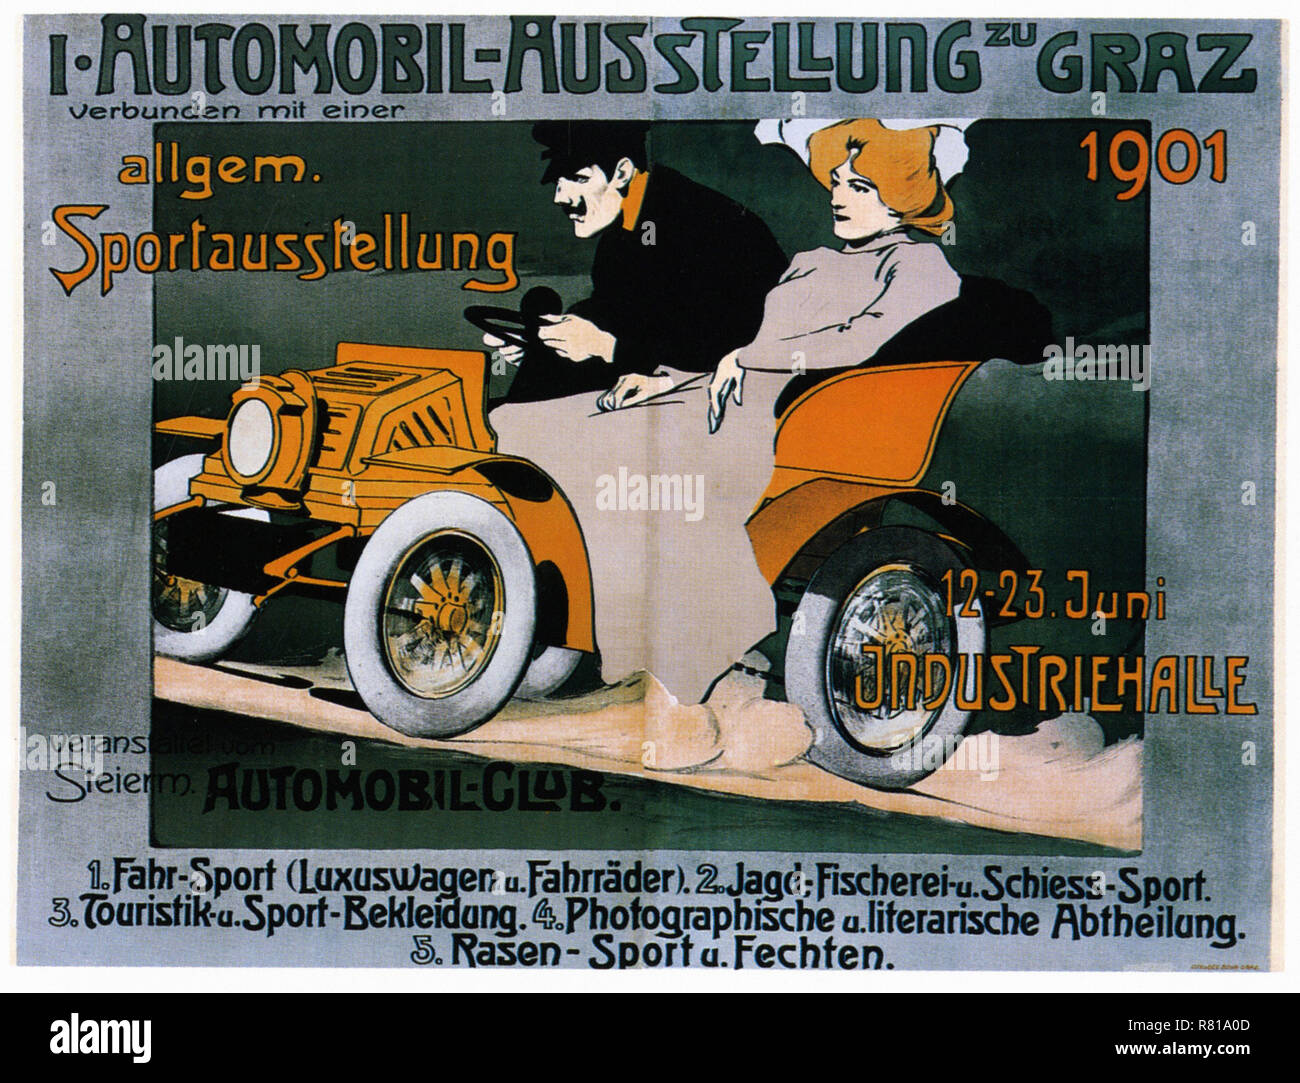 Graz Auto Show 1901 - Vintage car's advertising poster Stock Photo - Alamy